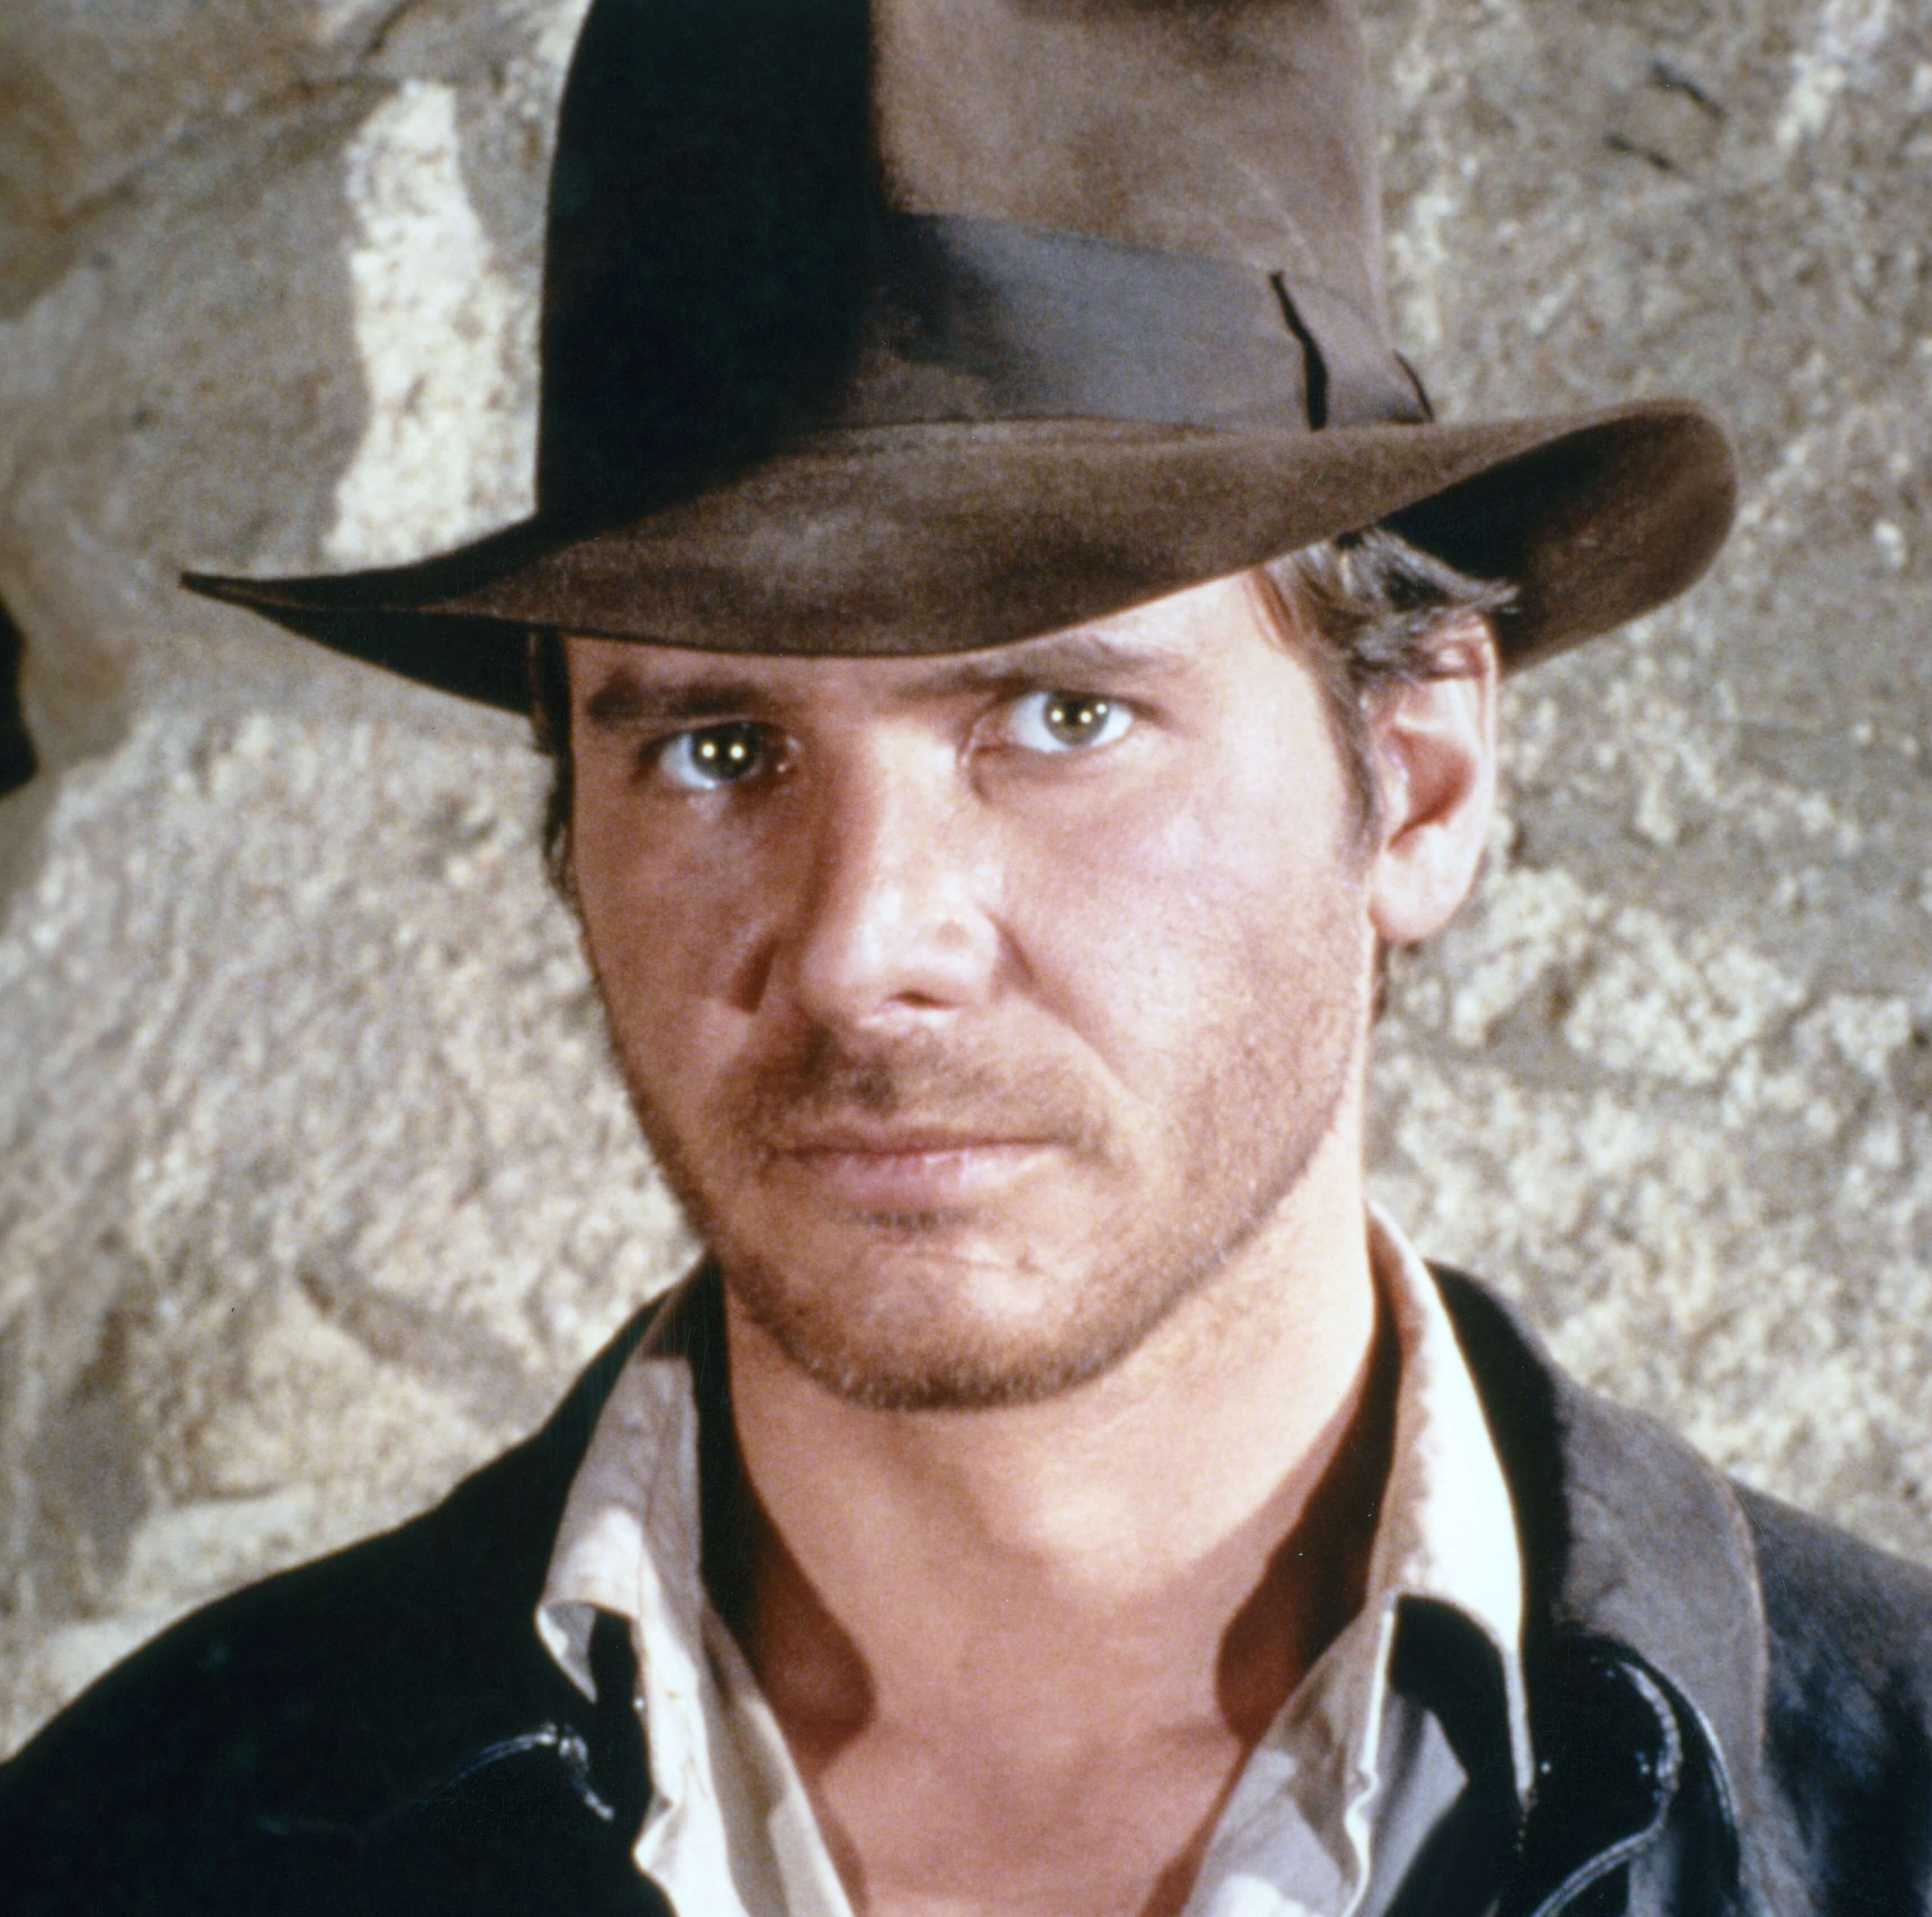 Indiana Jones in his iconic hat